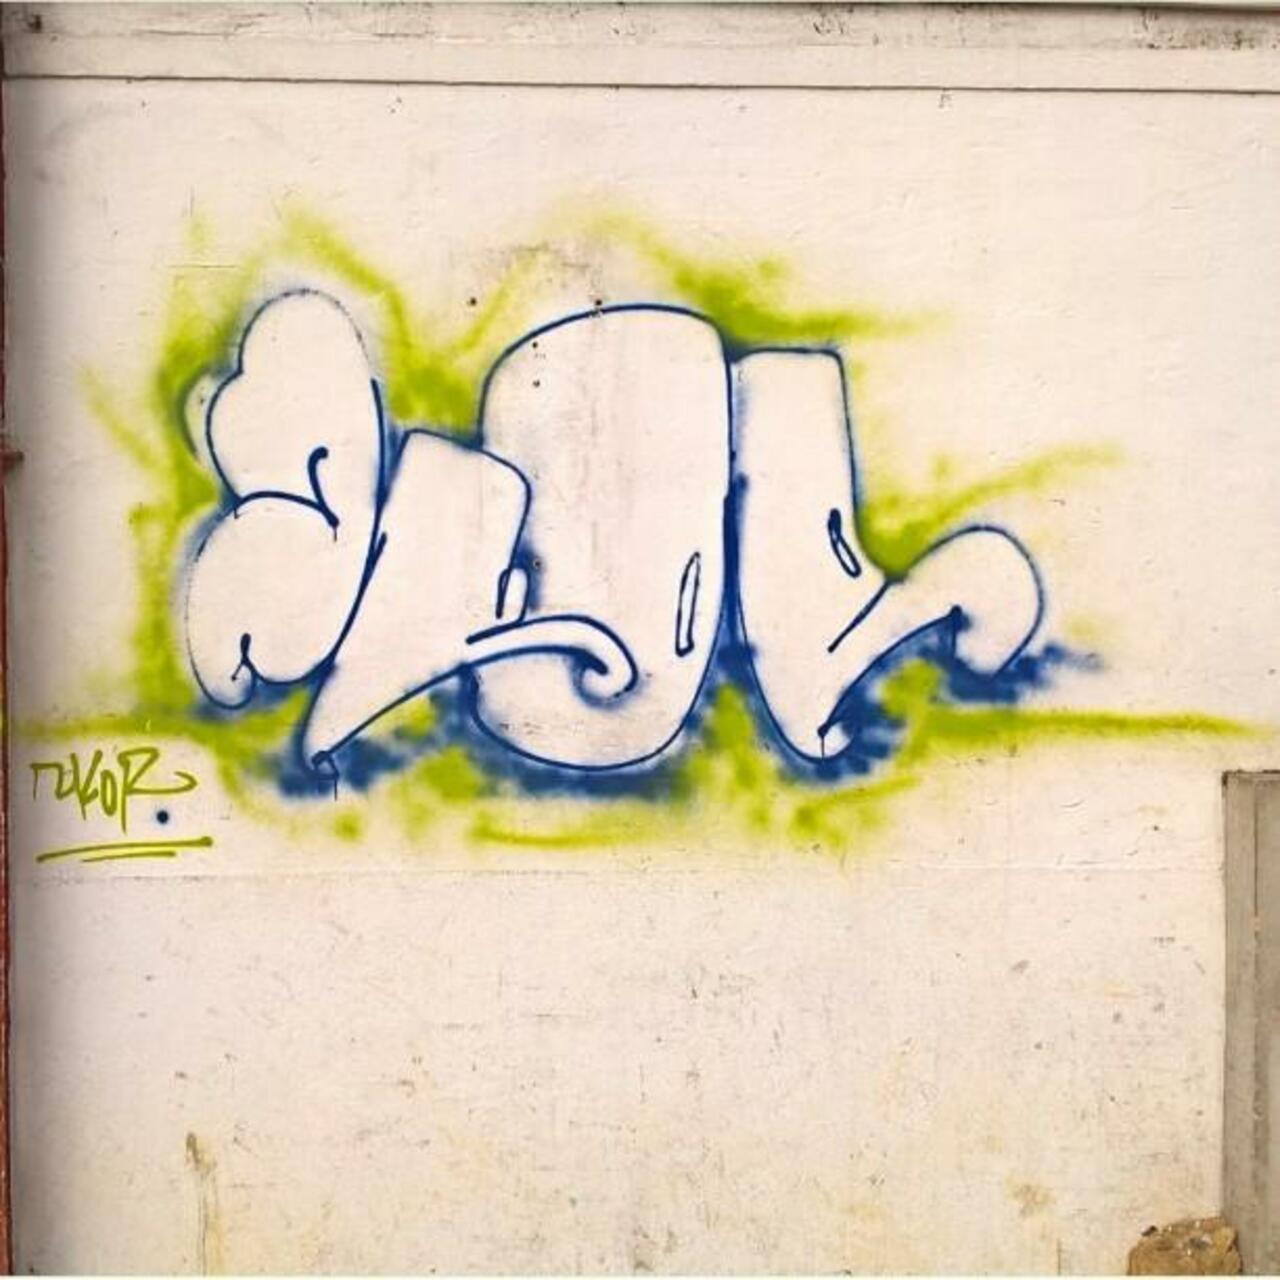 ZKOR ou 2KOR ou ALOR
#streetart #graffiti #graff #art #fatcap #bombing #sprayart #spraycanart #wallart #handstyle #… http://t.co/Z6vpMM2xxD